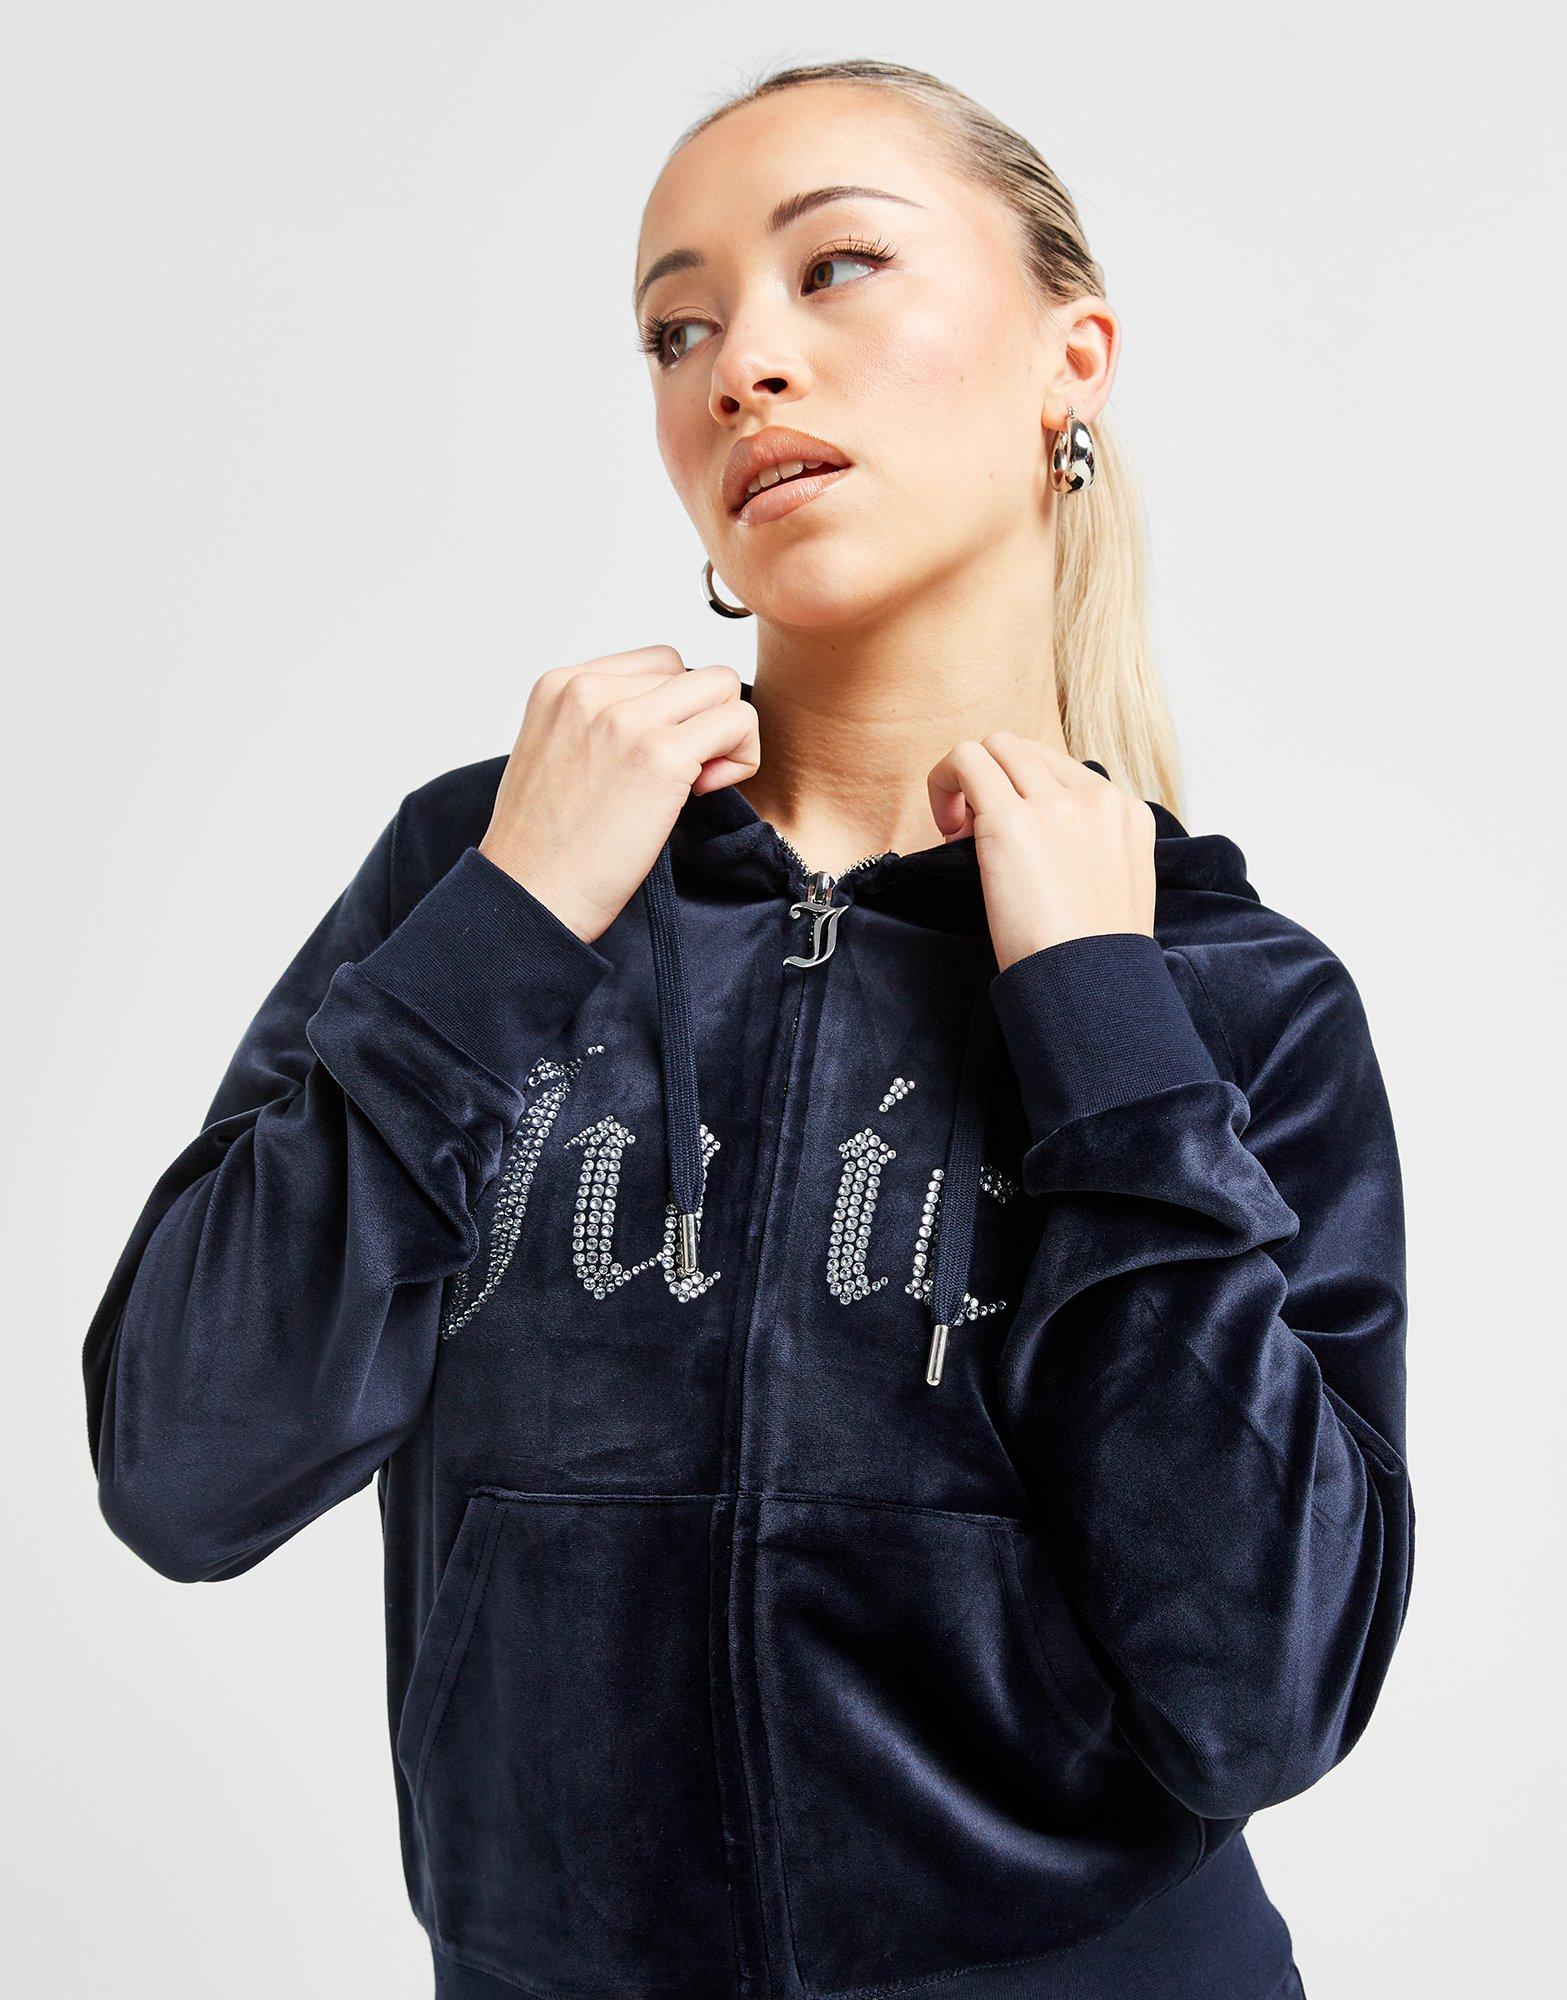 Juicy Couture Women's Classic Velour Rhinestone Logo Comfort Fit Full Zip Hooded Jacket (Regal Blue, L)